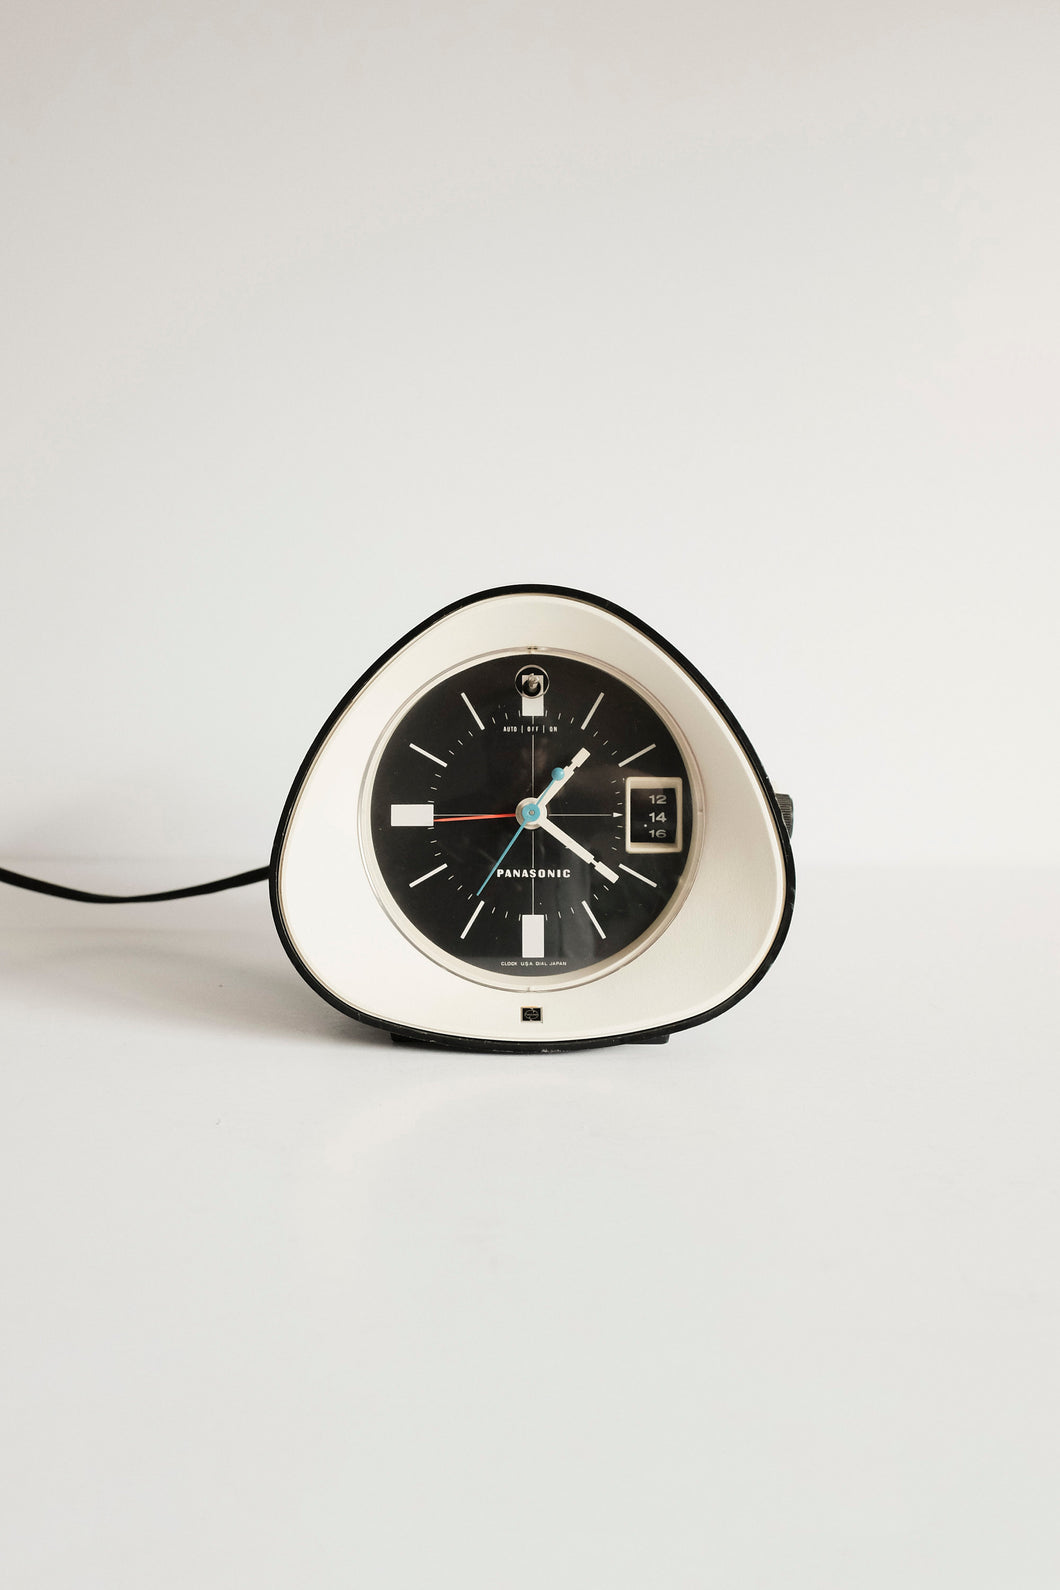 Mid Century Panasonic RC-1091 Alarm Clock Radio - 1969 Space Age Made in Japan